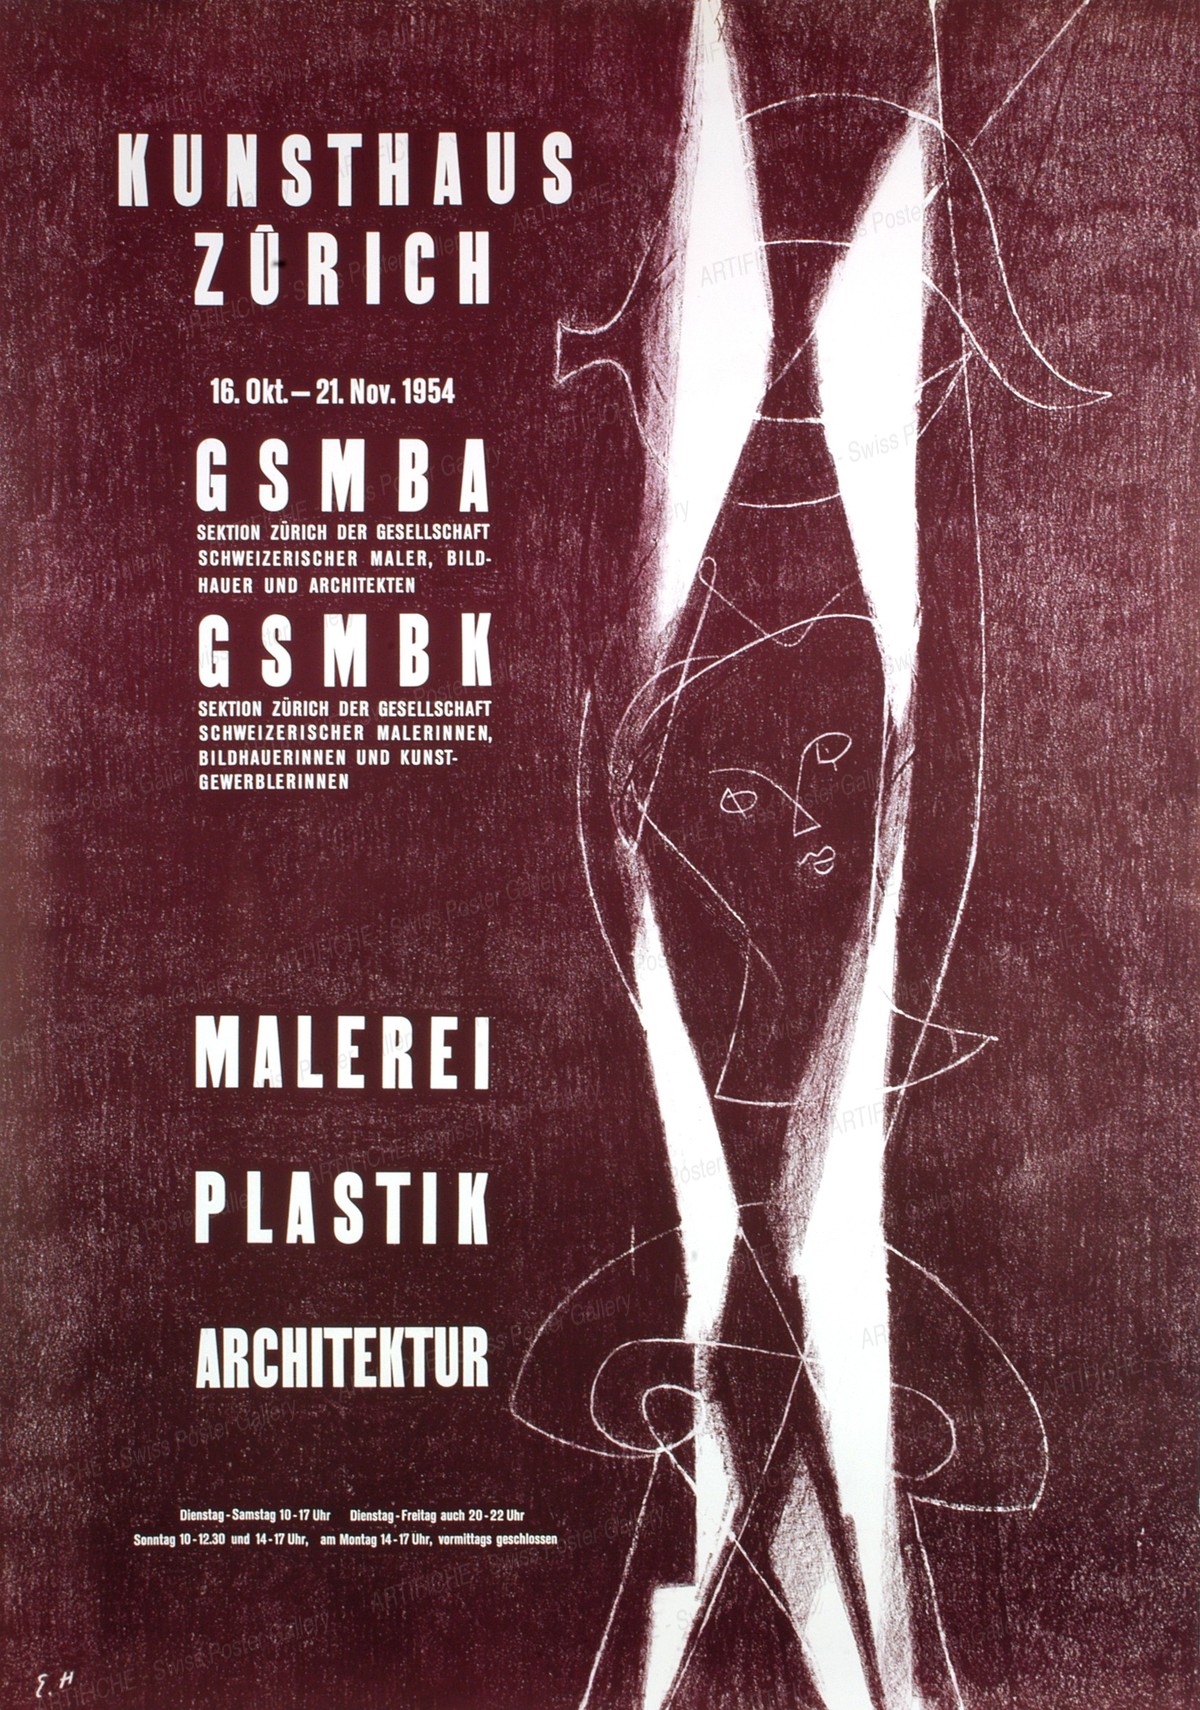 GSMBA Zürich – Kunsthaus Zürich 1954 – Malerei Plastik Architektur, Monogram E.H.